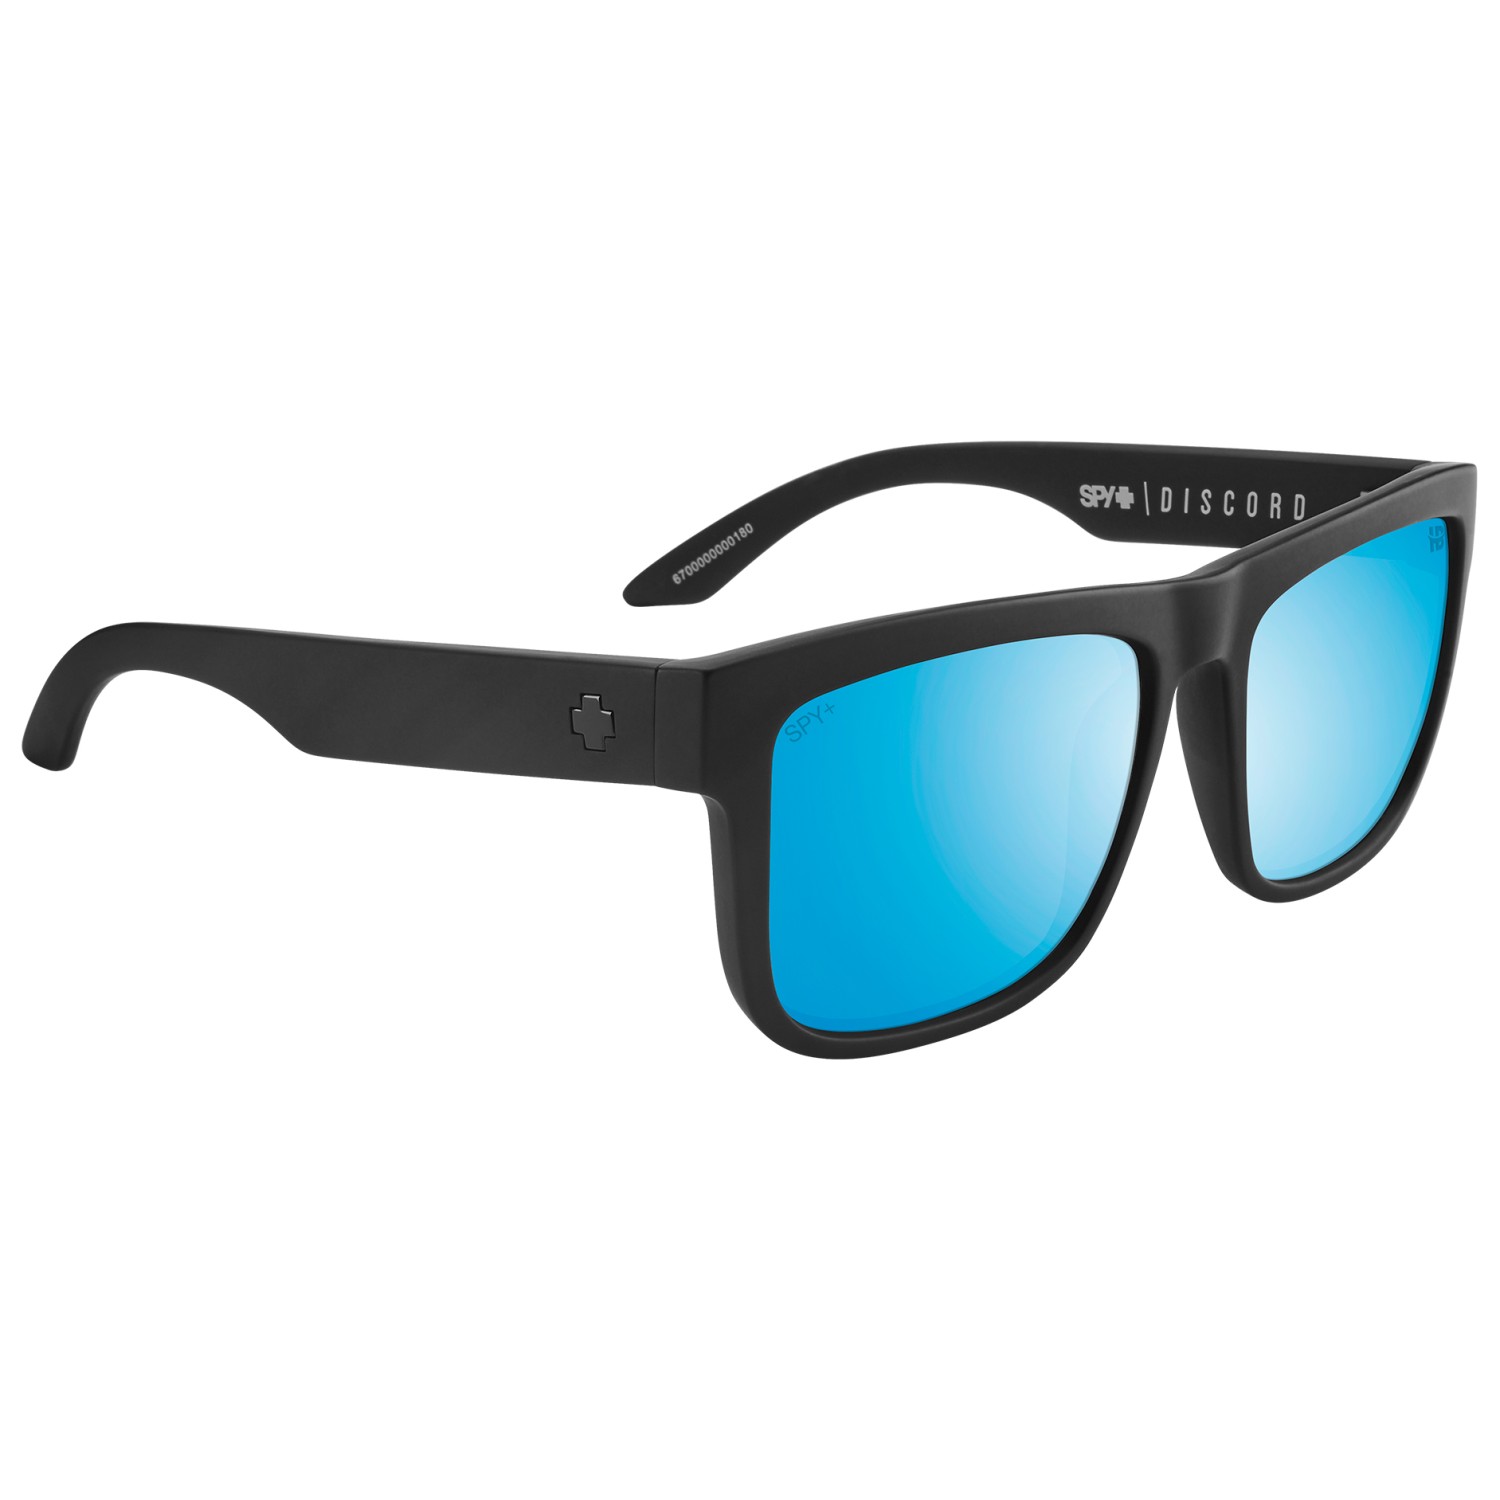 Велосипедные очки Spy+ Discord Mirror S3 (VLT 18%), цвет Discord Matte Black